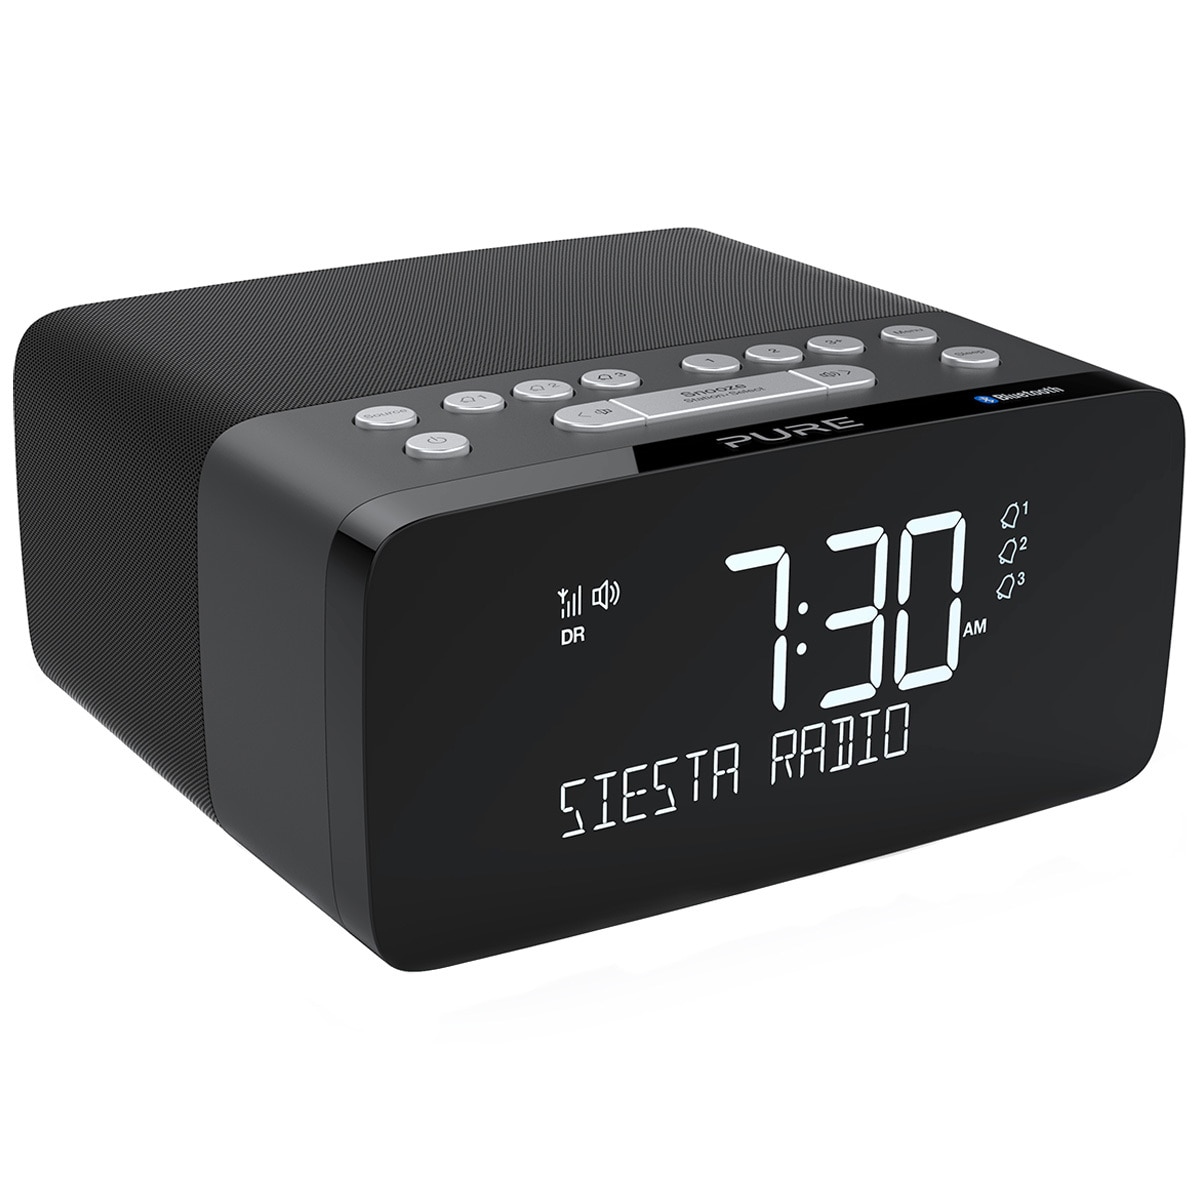 Siesta Range 245039 Graph - Pure Portable Dab Radio